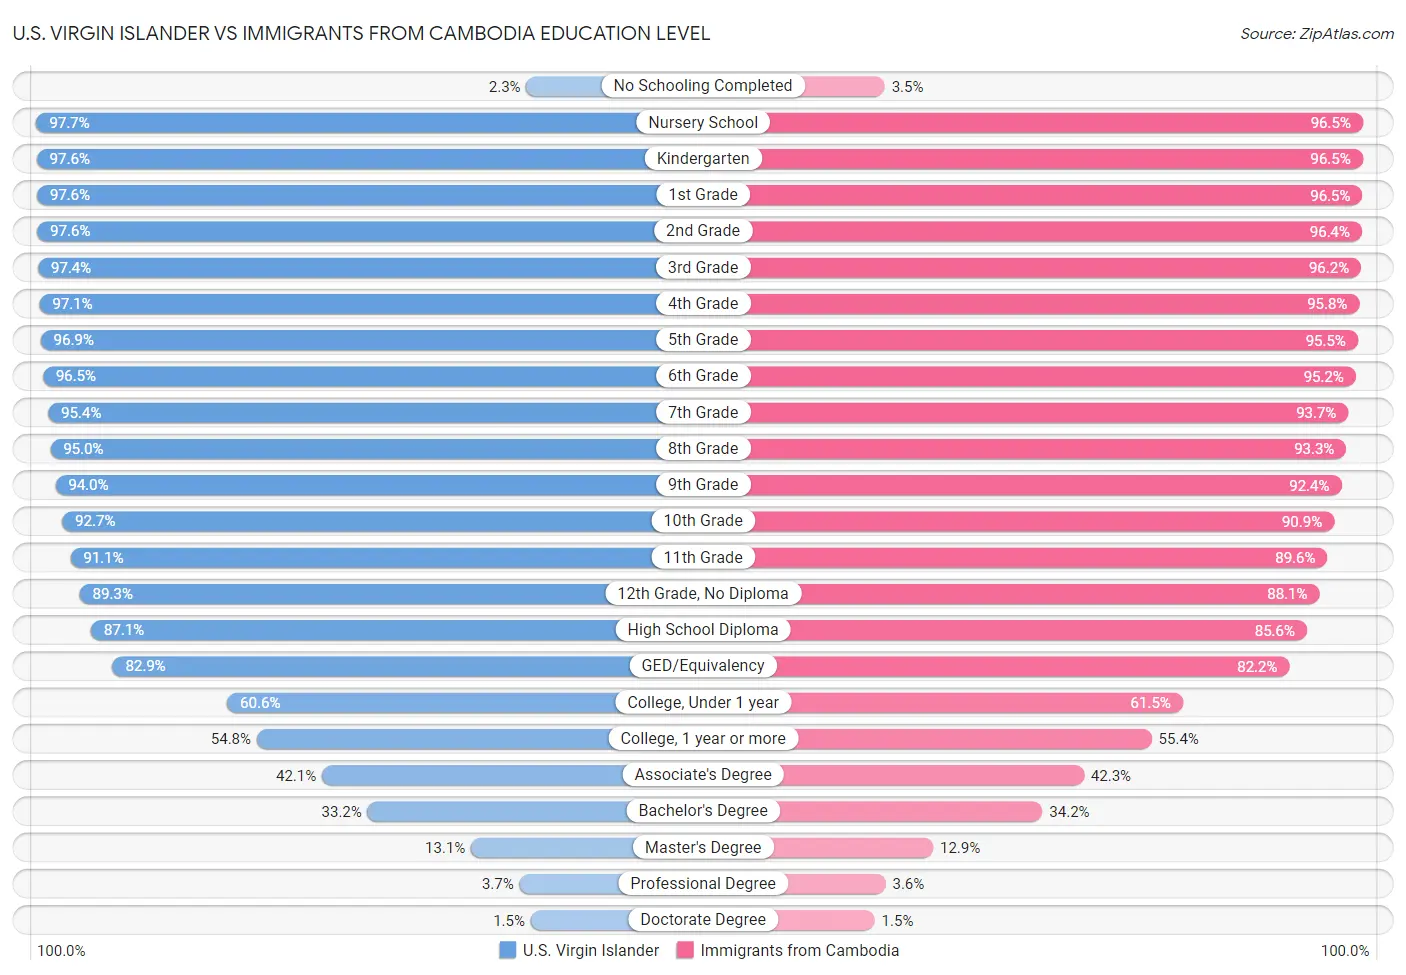 U.S. Virgin Islander vs Immigrants from Cambodia Education Level